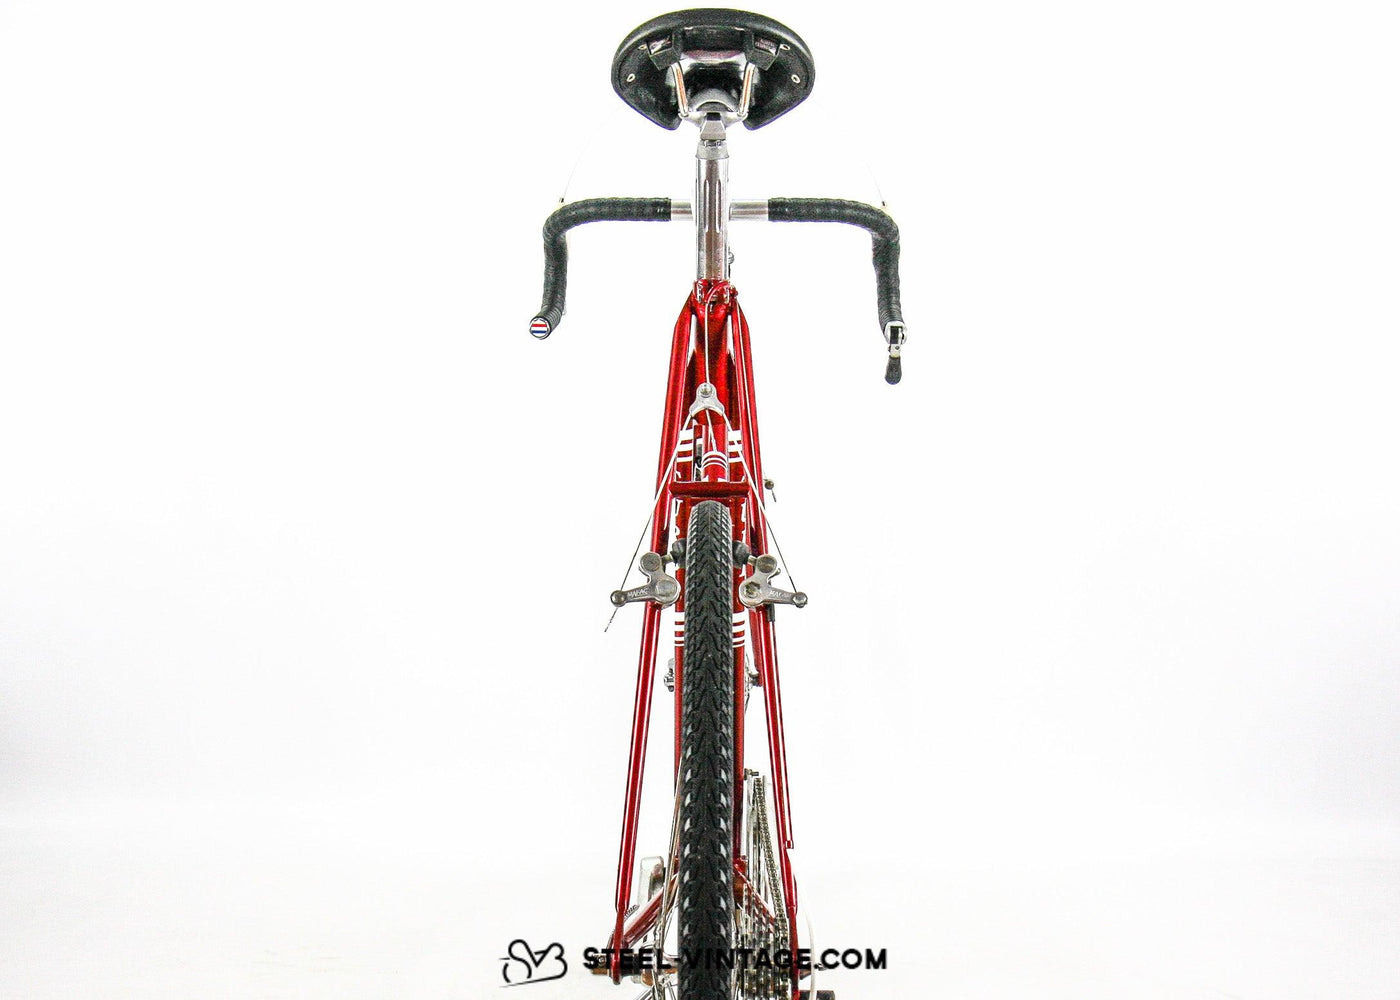 Empella Turbo Classic Cyclocross Bike - Steel Vintage Bikes